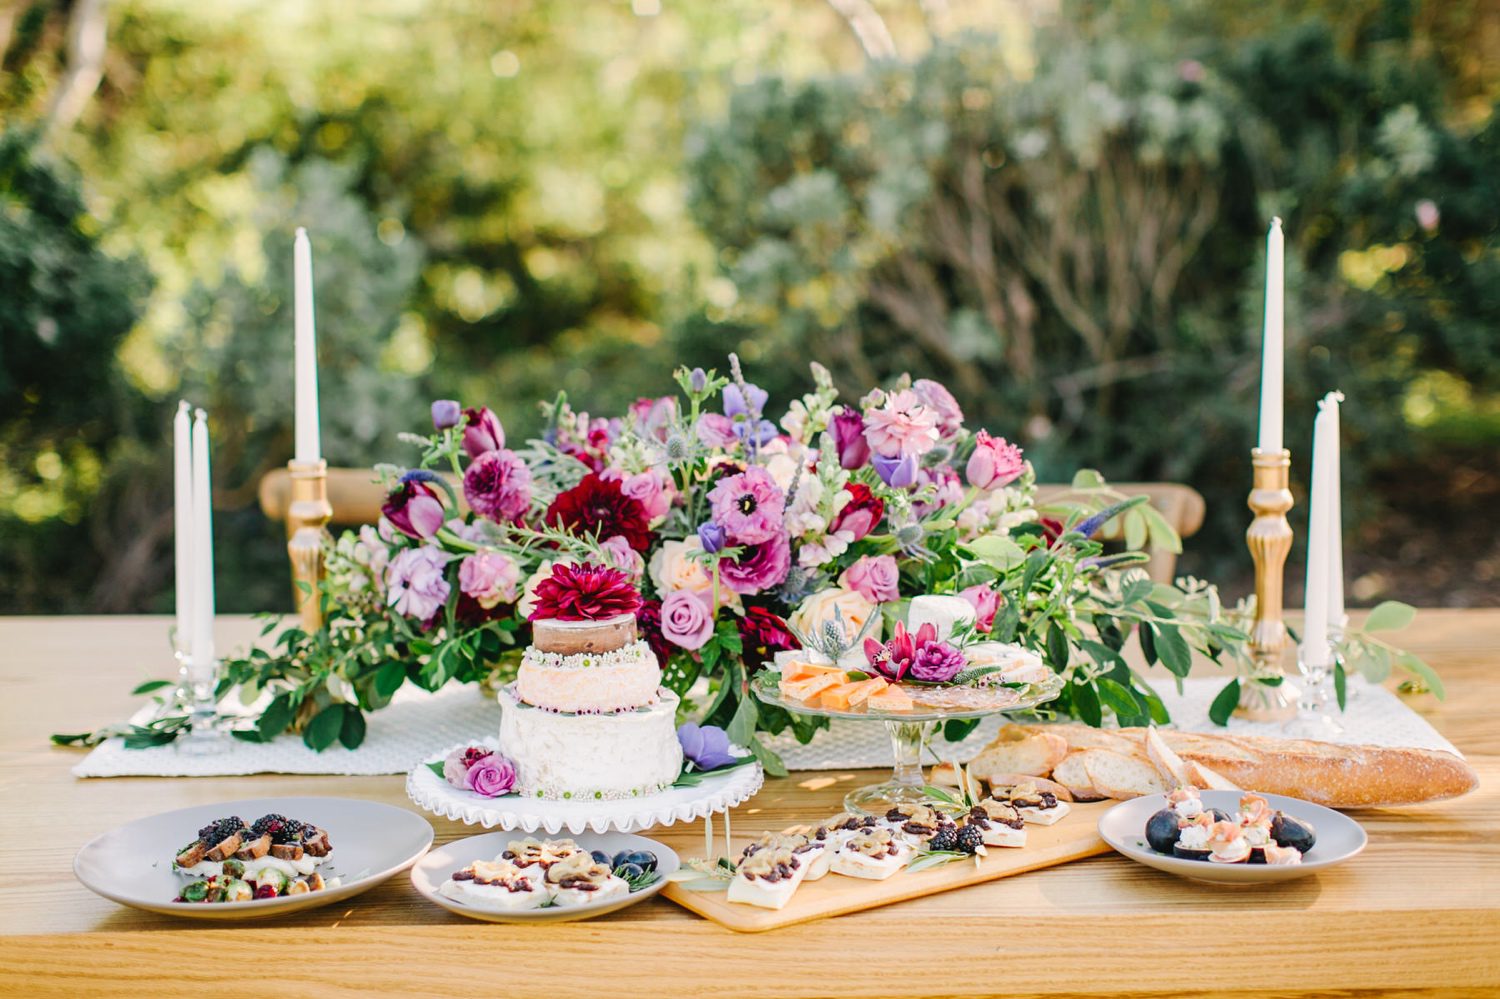 Wedding Details including wedding cake and elegant charcuterie